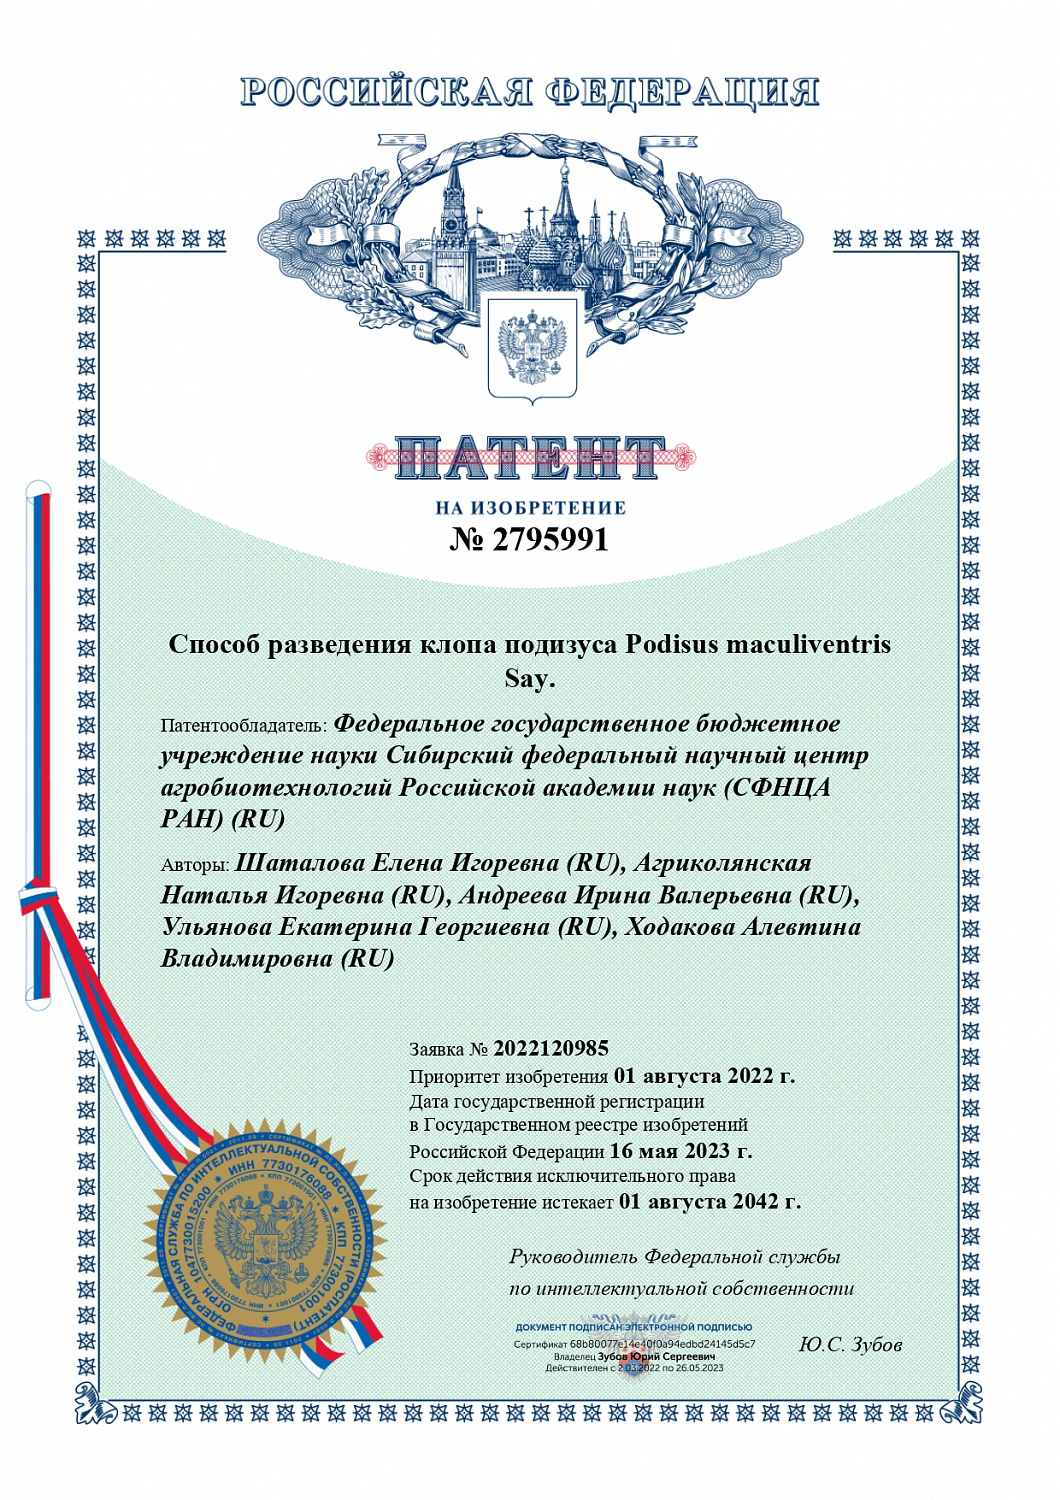 Сотрудники СФНЦА РАН получили патент на изобретение «Способ разведения клопа подизуса Podisus maculiventris Say»